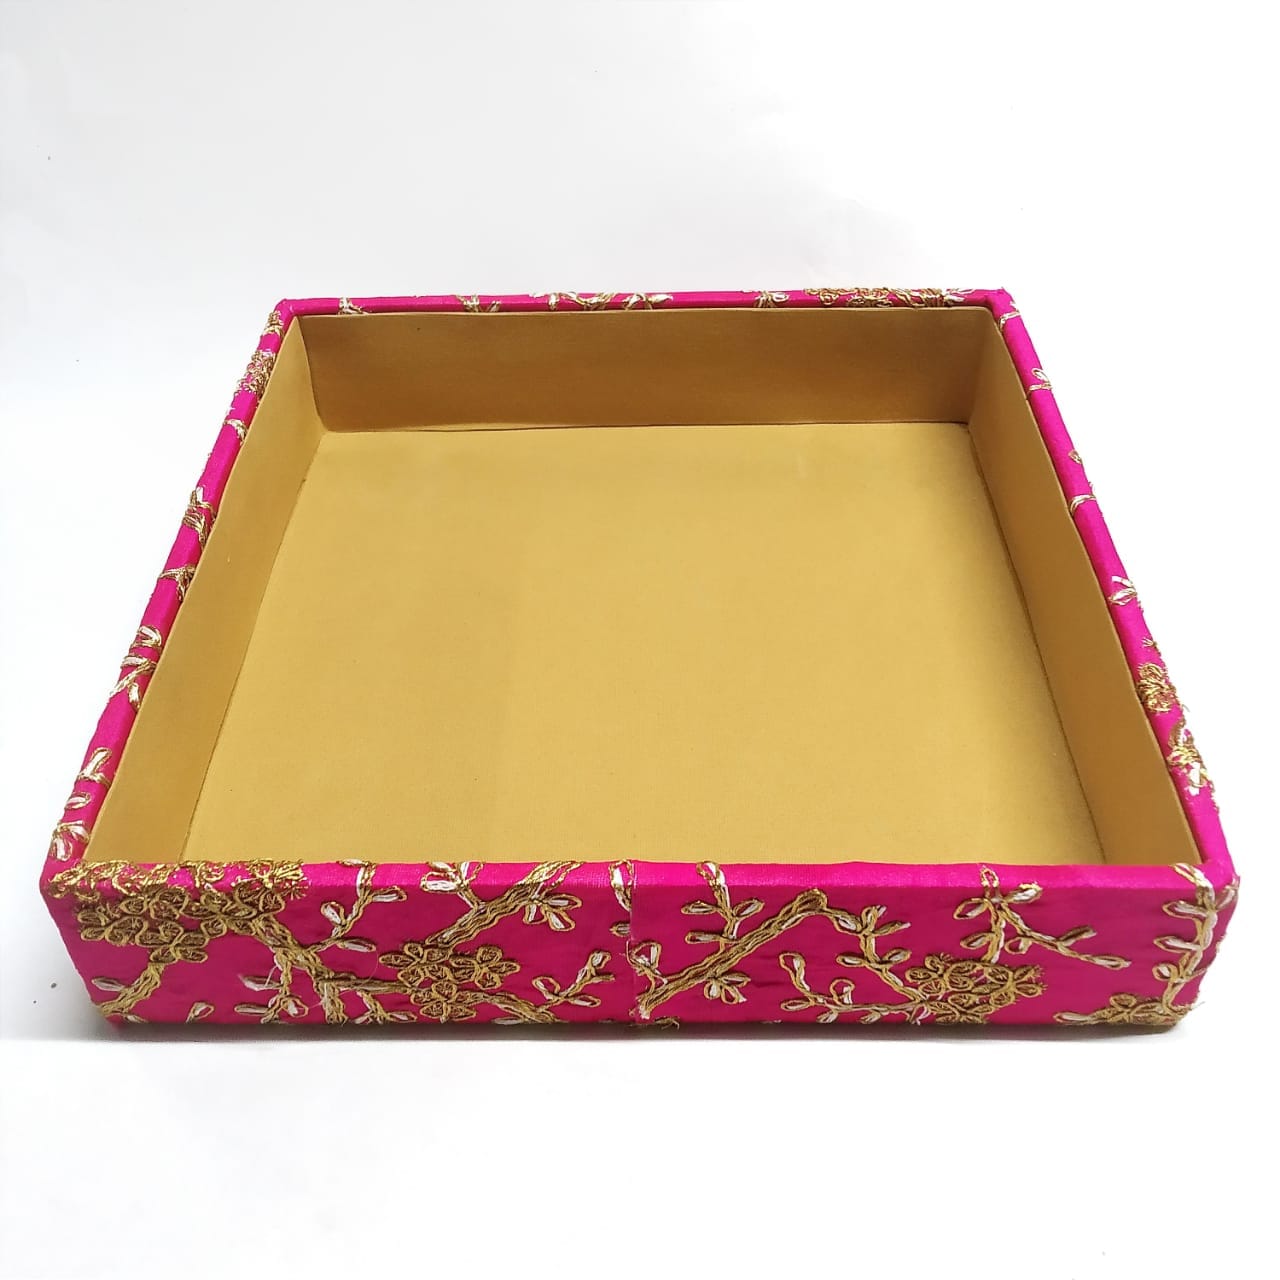 vivara prashant Hamper Supplies BIG 10 X 10 X 2 INCH Decorative Tray for Gifting, storage and Hamper box